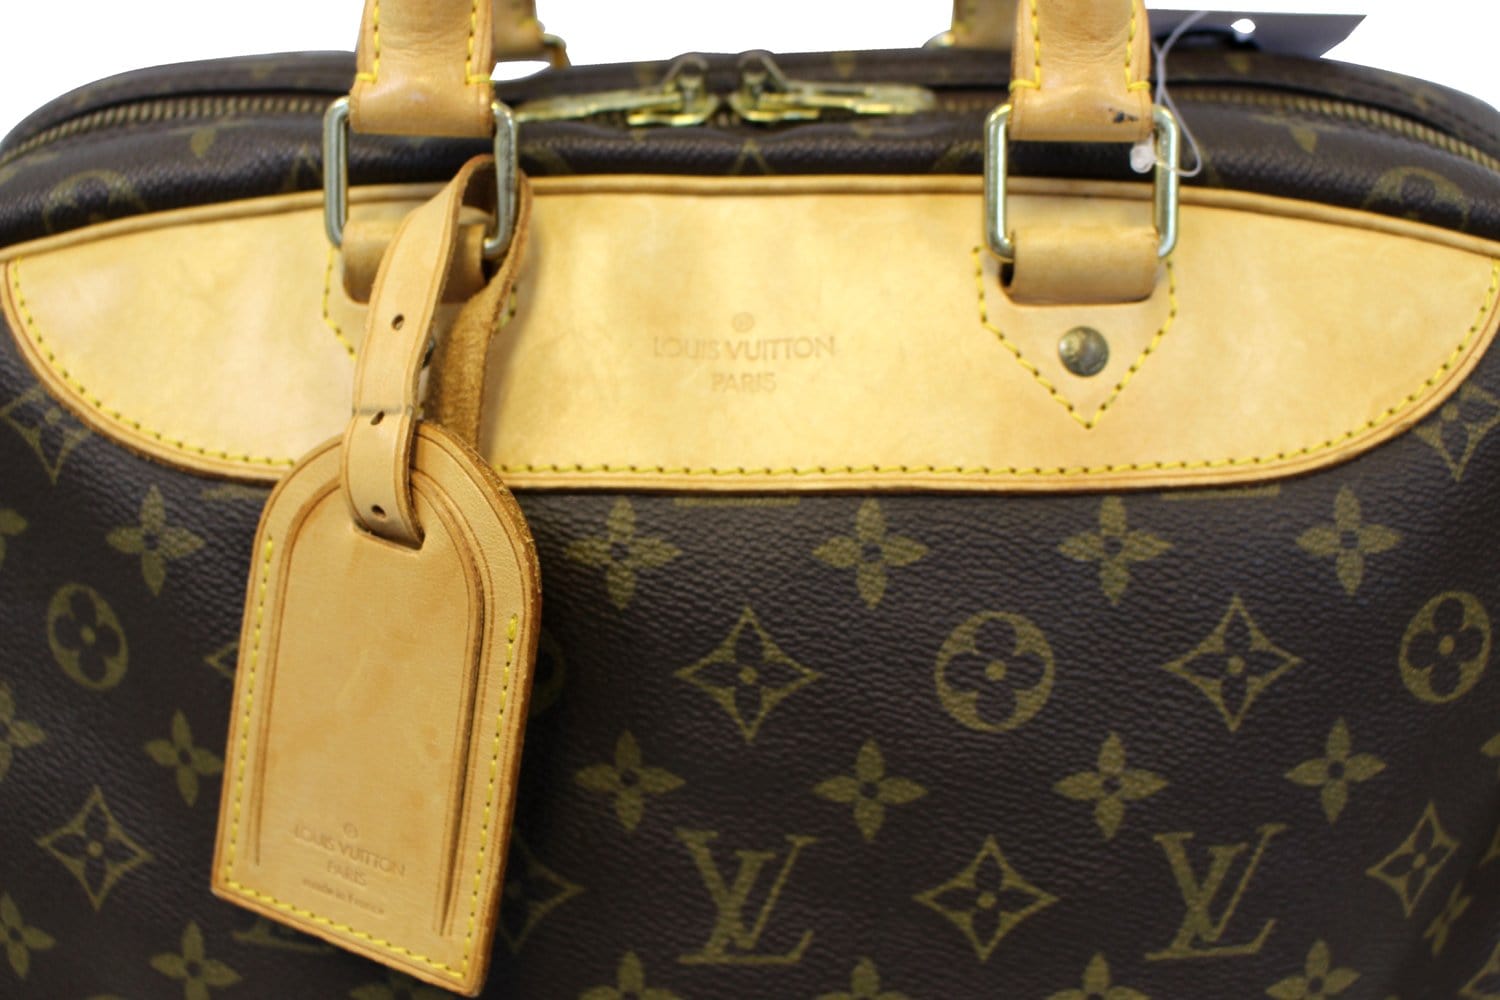 Louis Vuitton 2001 Pre-owned Evasion Travel Bag - Brown